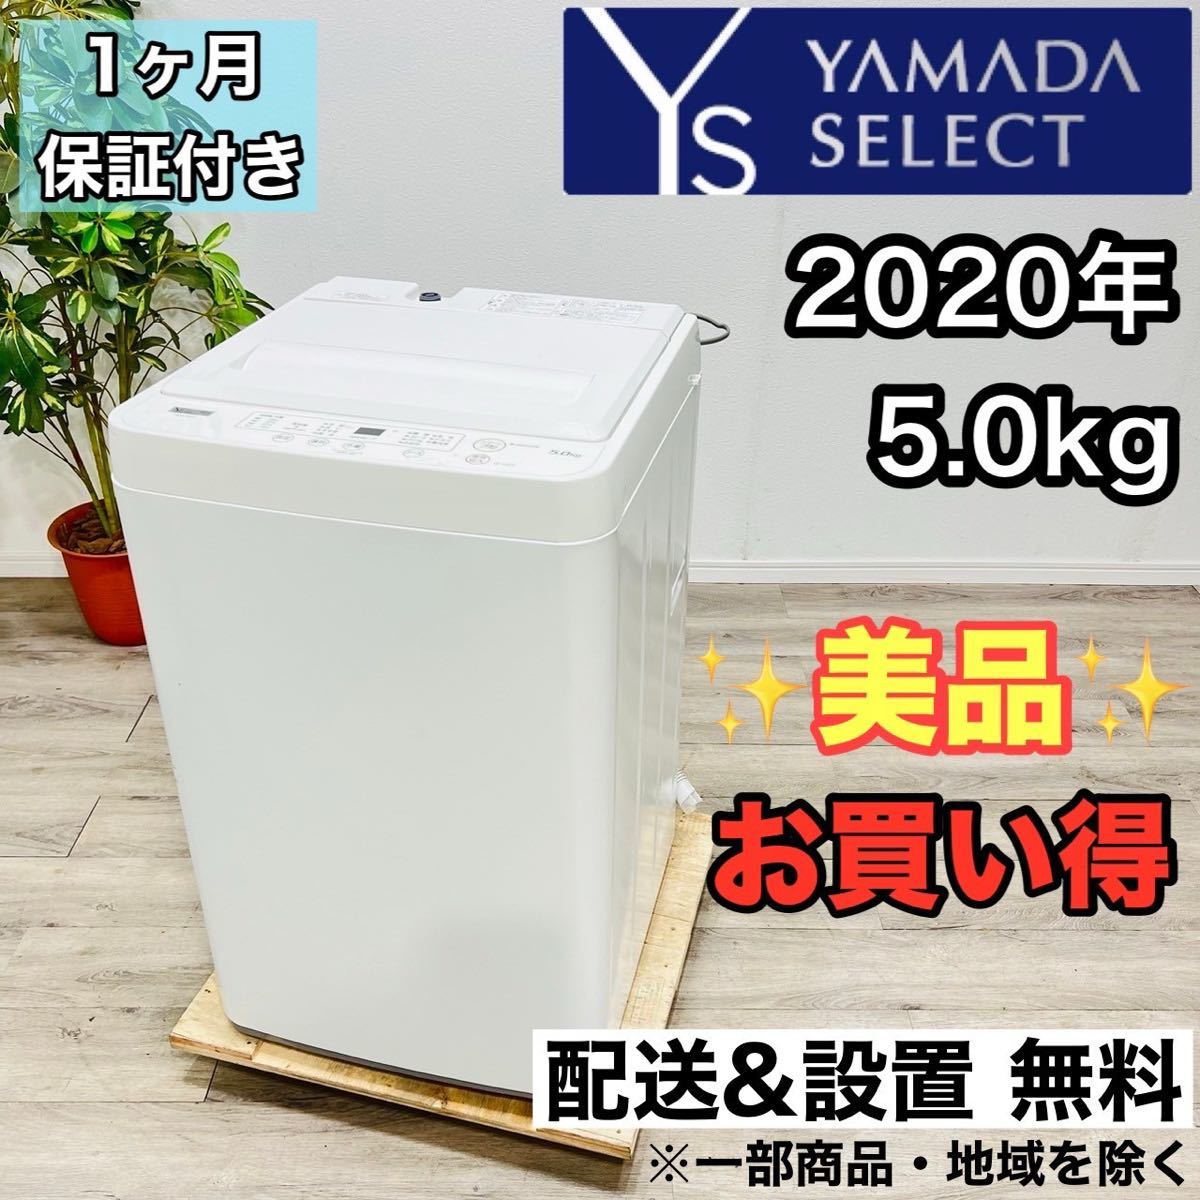 YAMADA SELECT a1894 洗濯機5.0kg 2020年製2－日本代購代Bid第一推介